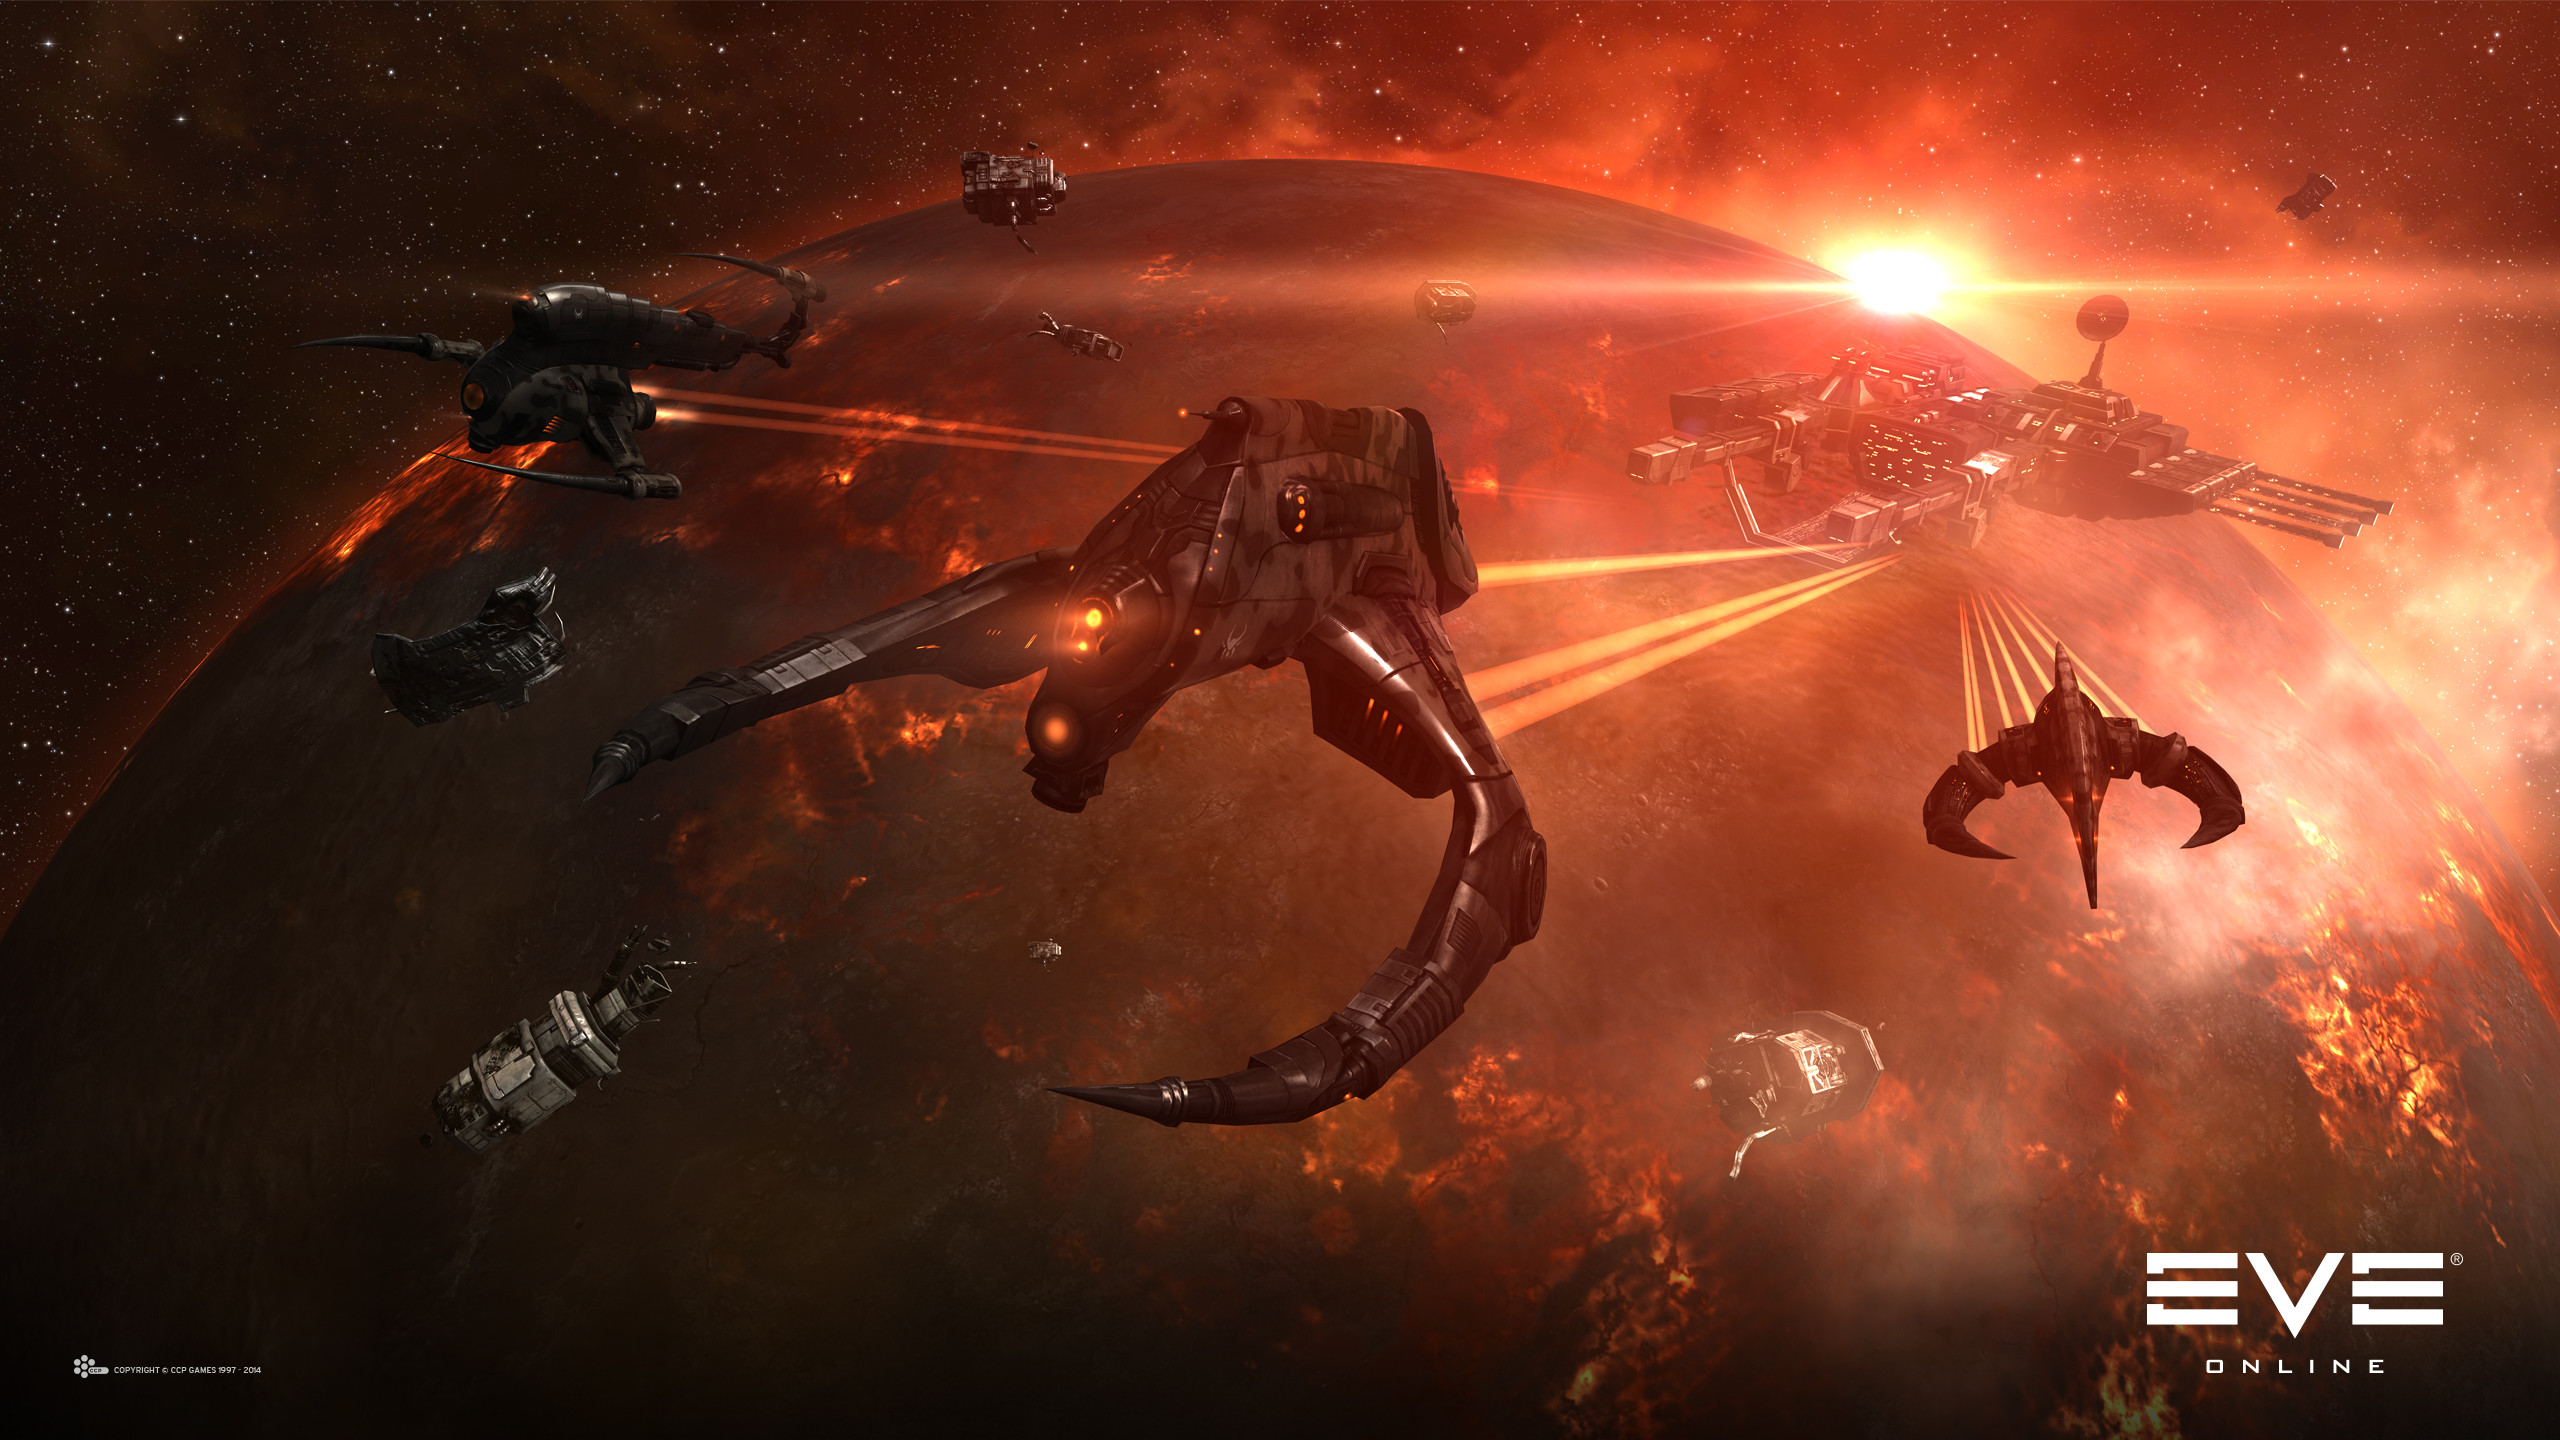 Eve Online Backgrounds (79+ images)